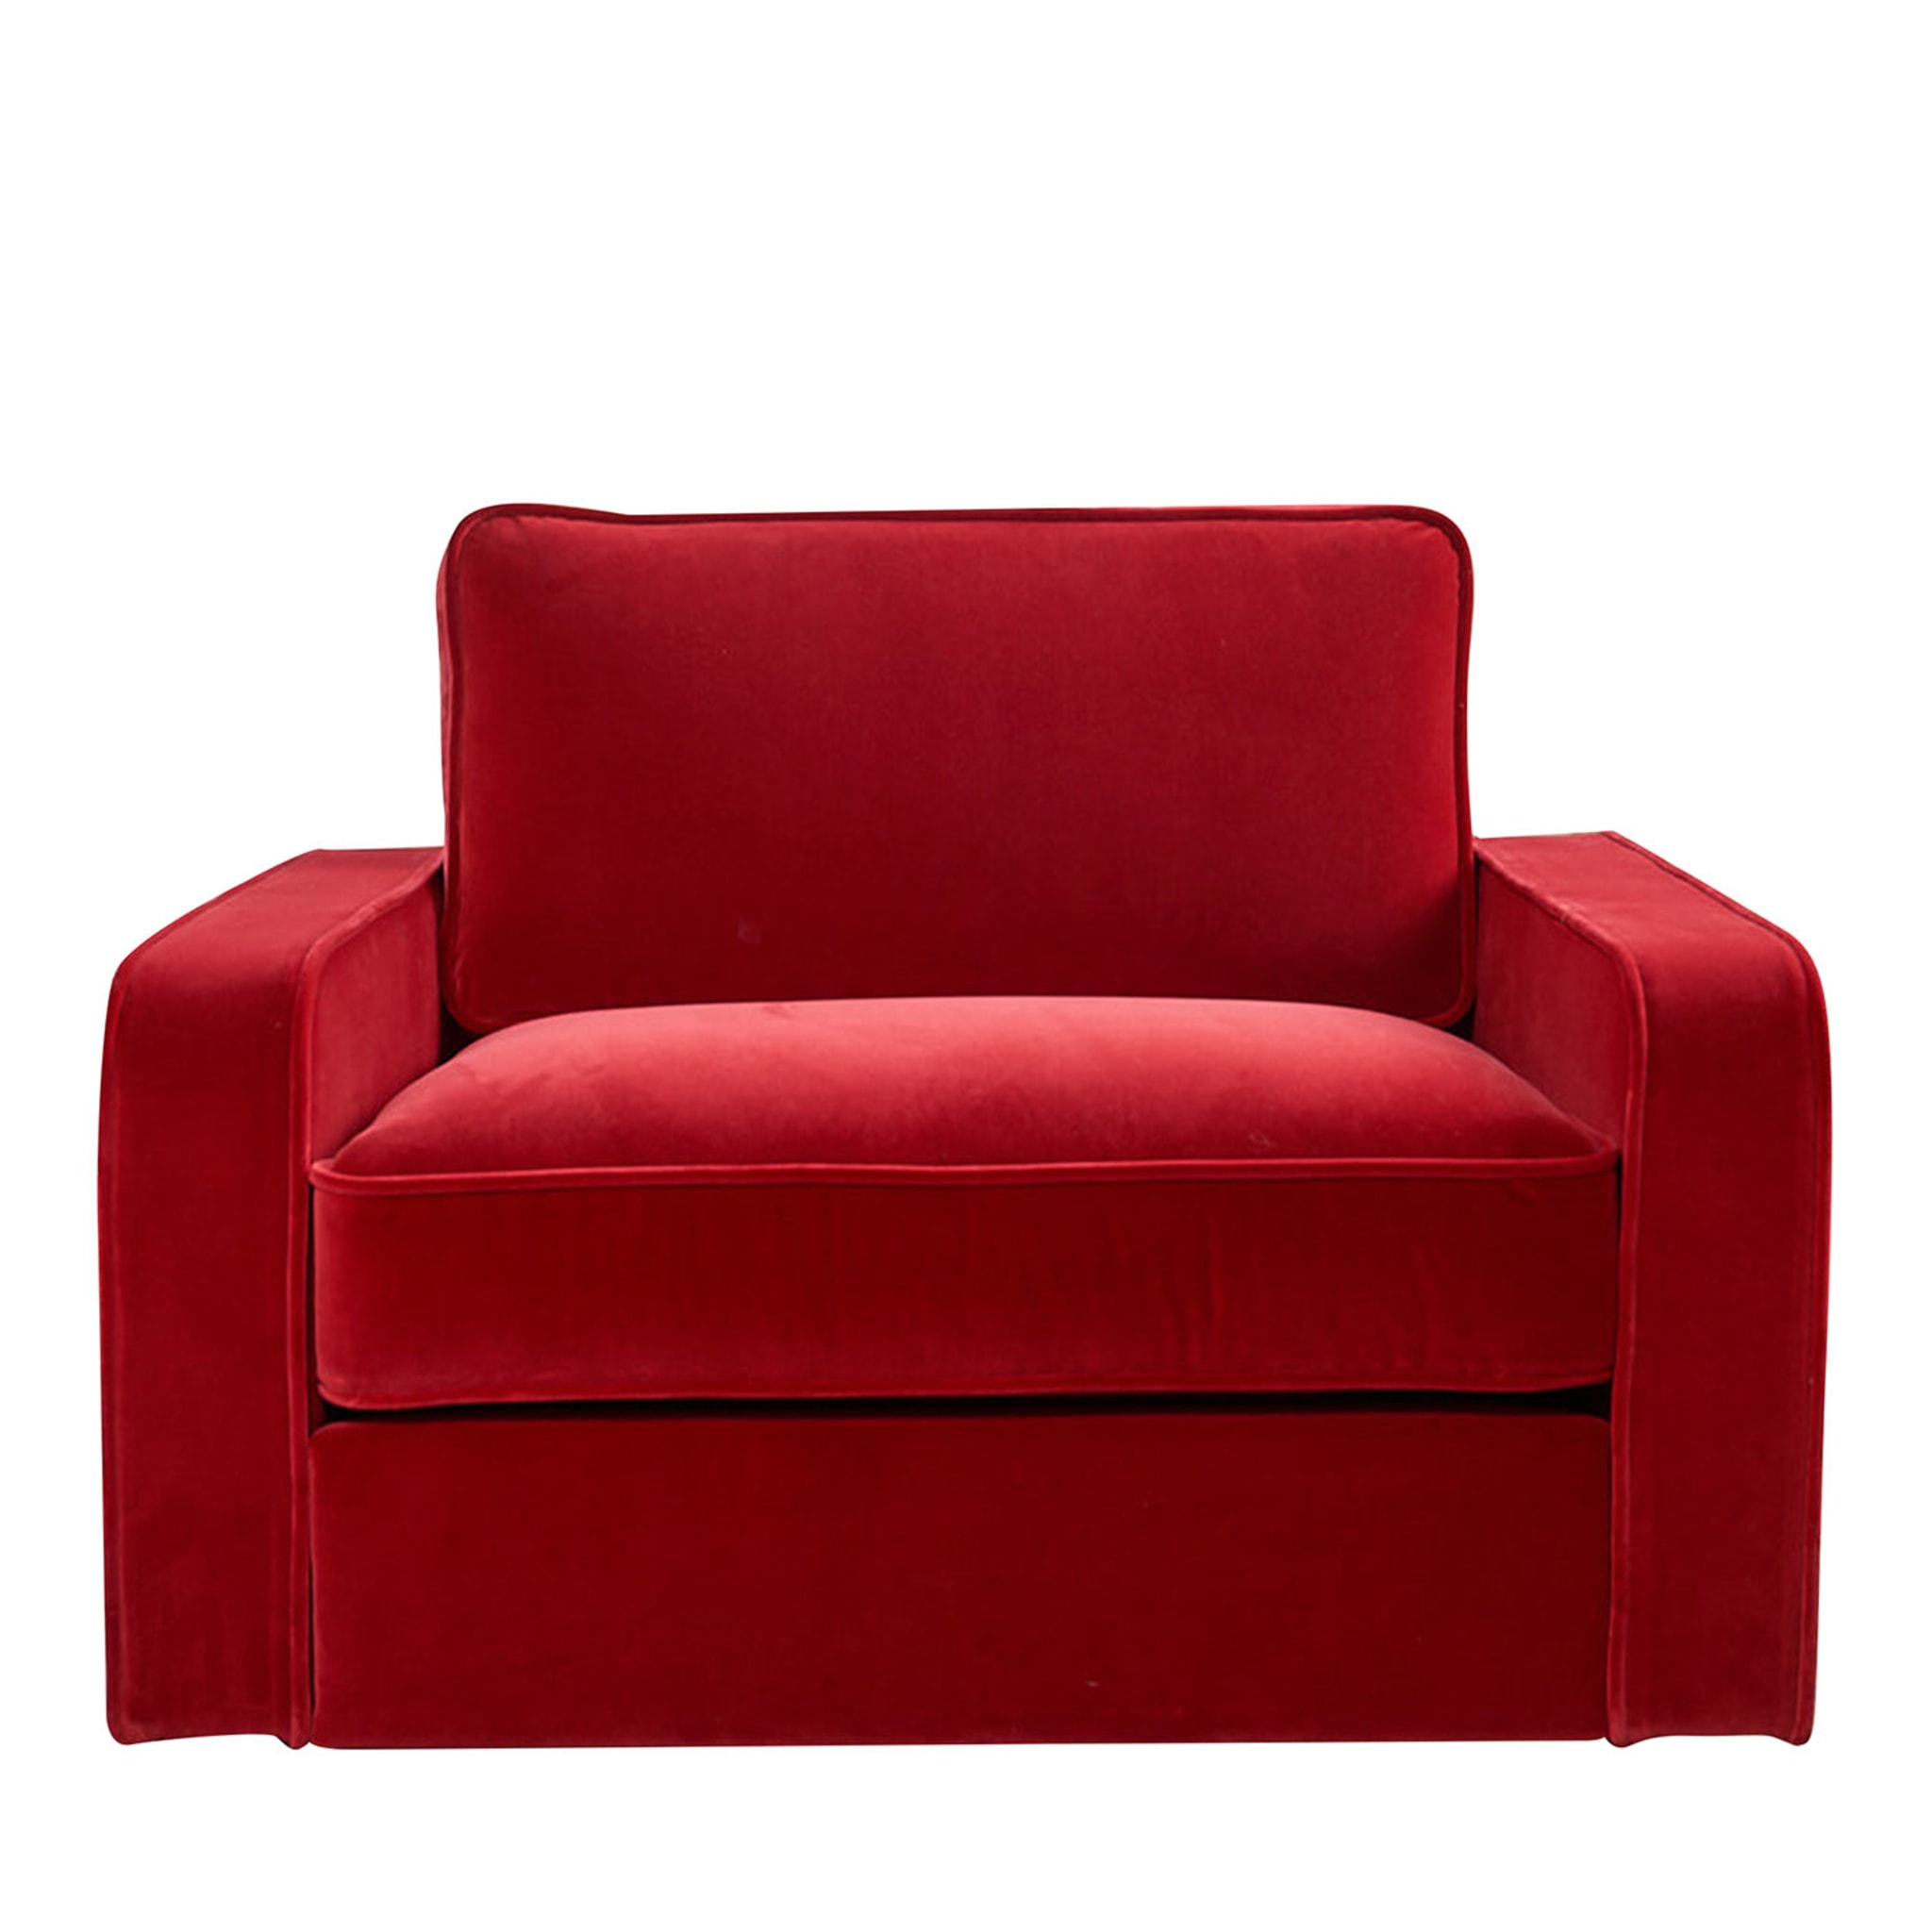 Romeo Red Armchair - Main view